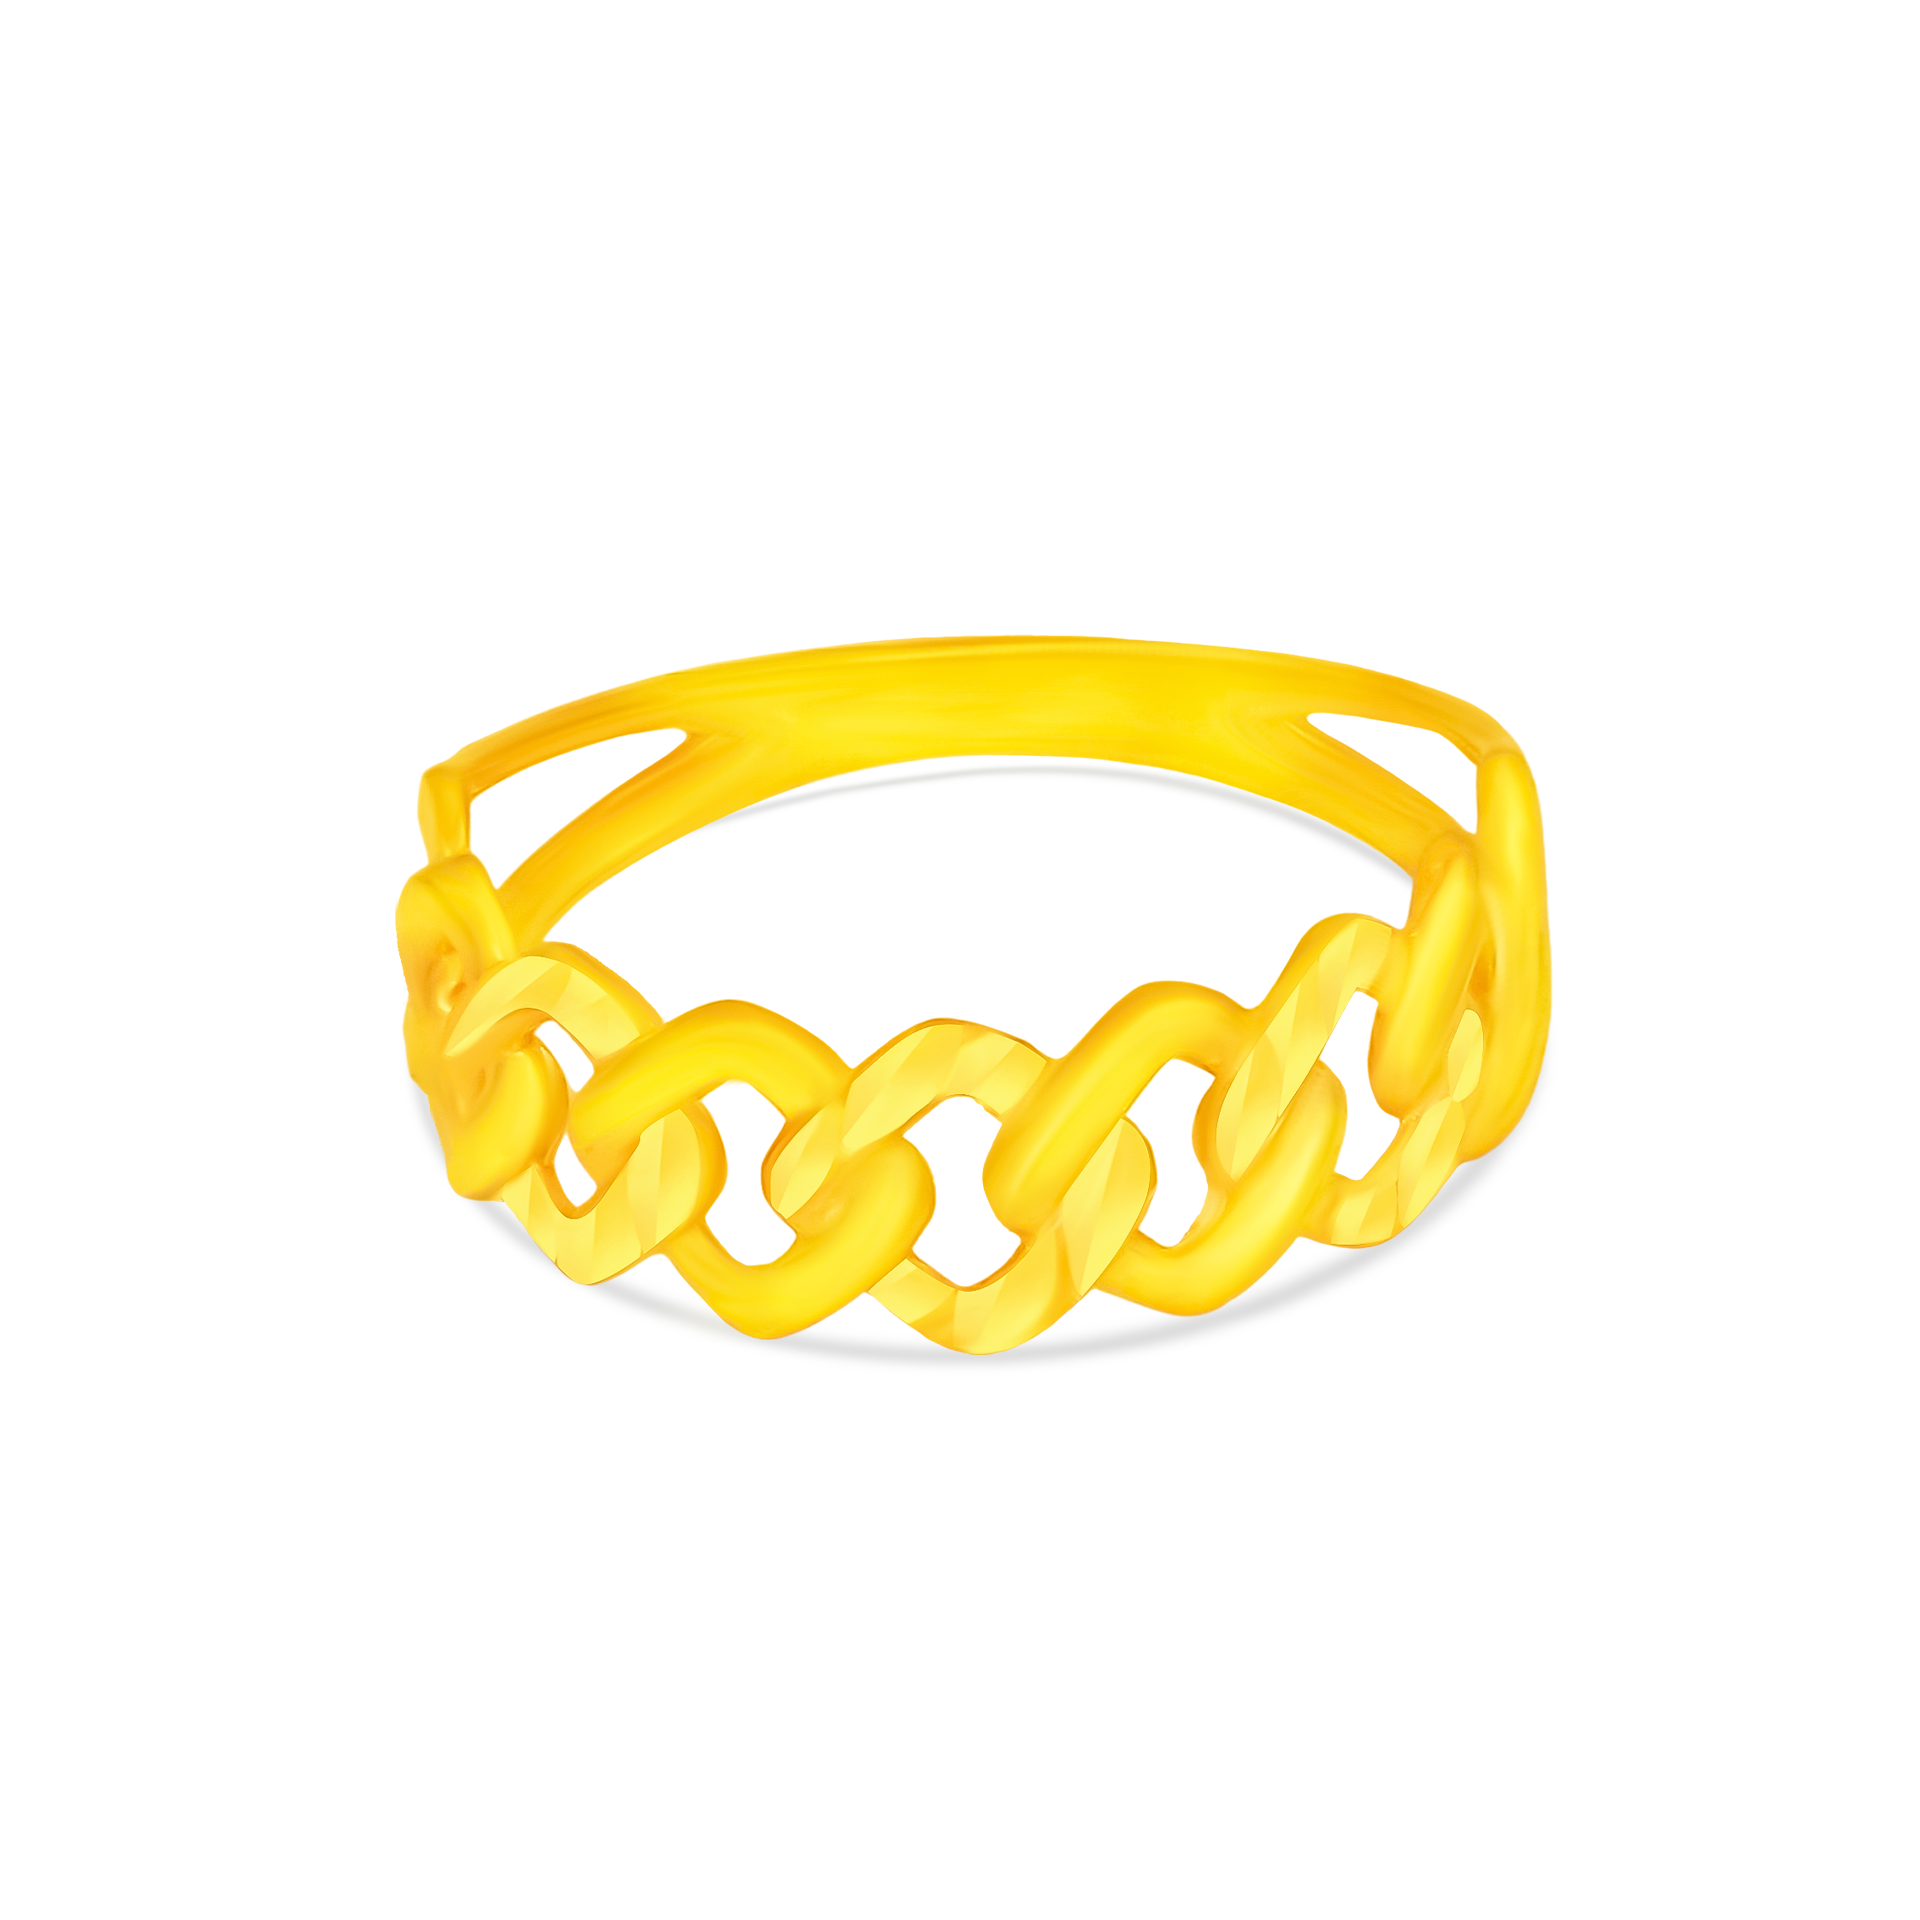 Om Yellow Stone With Diamond Antique Design Gold Plated Ring For Men -  Style A994, सोने का पानी चढ़ी हुई अंगूठी - Soni Fashion, Rajkot | ID:  2851379627673